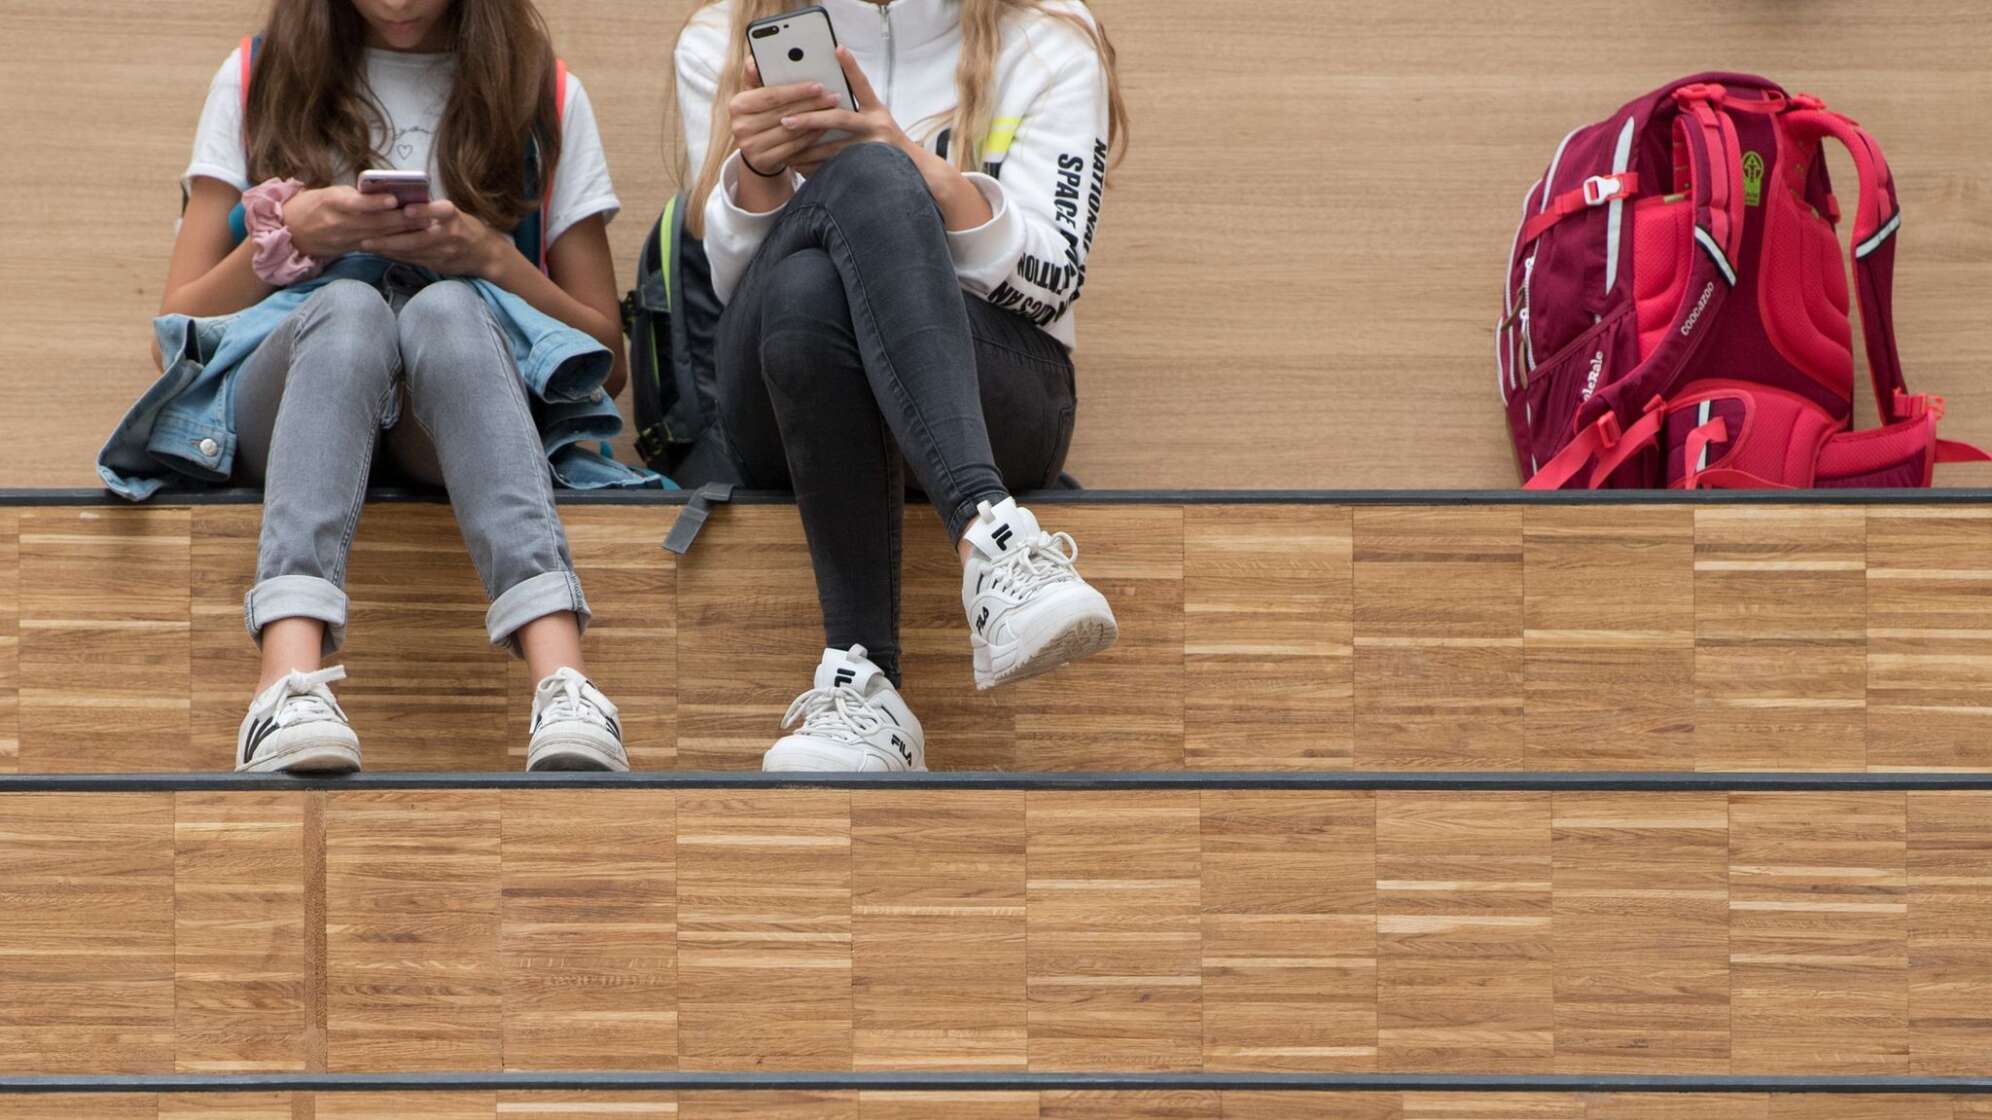 Schülerinnen mit Smartphones